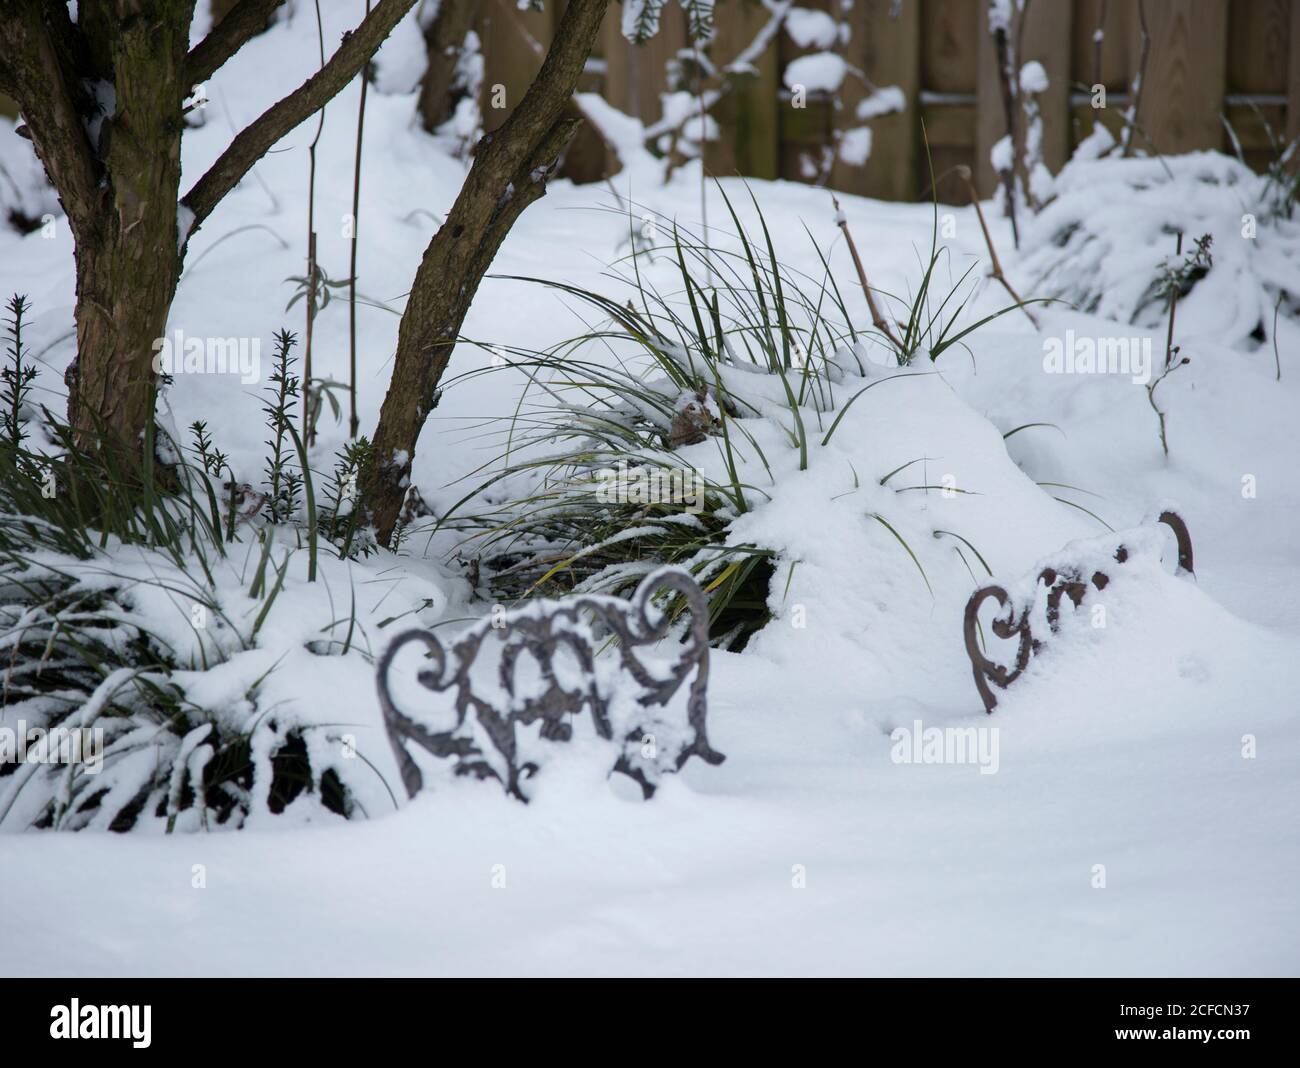 Sedge in the snow with iron border Stock Photo